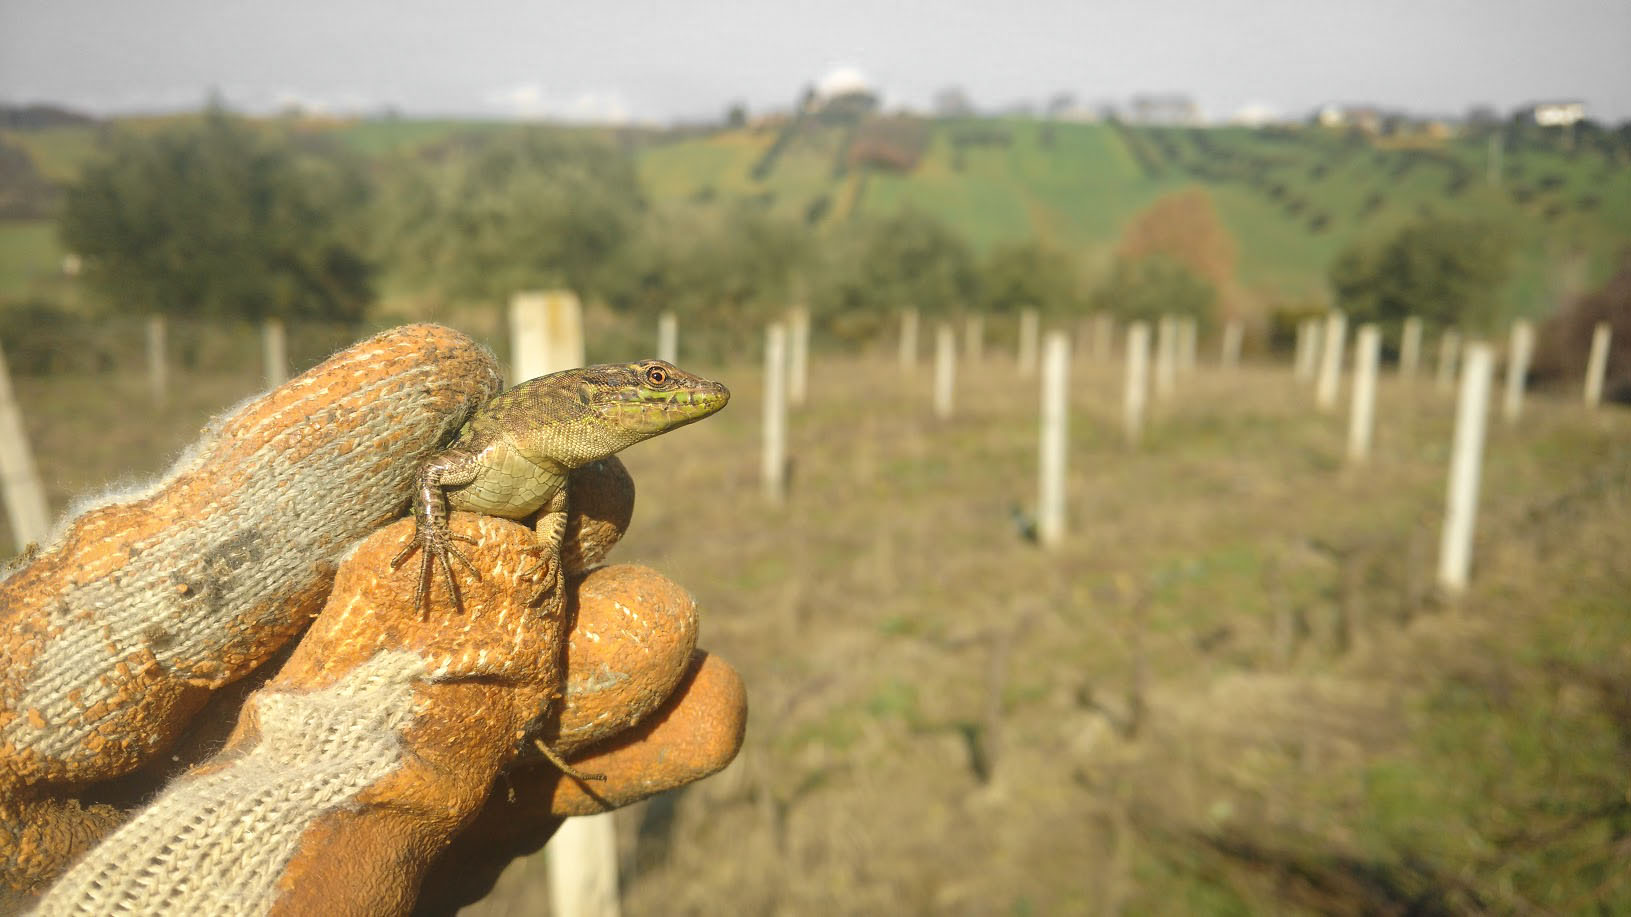 Lizard in the vineyard...